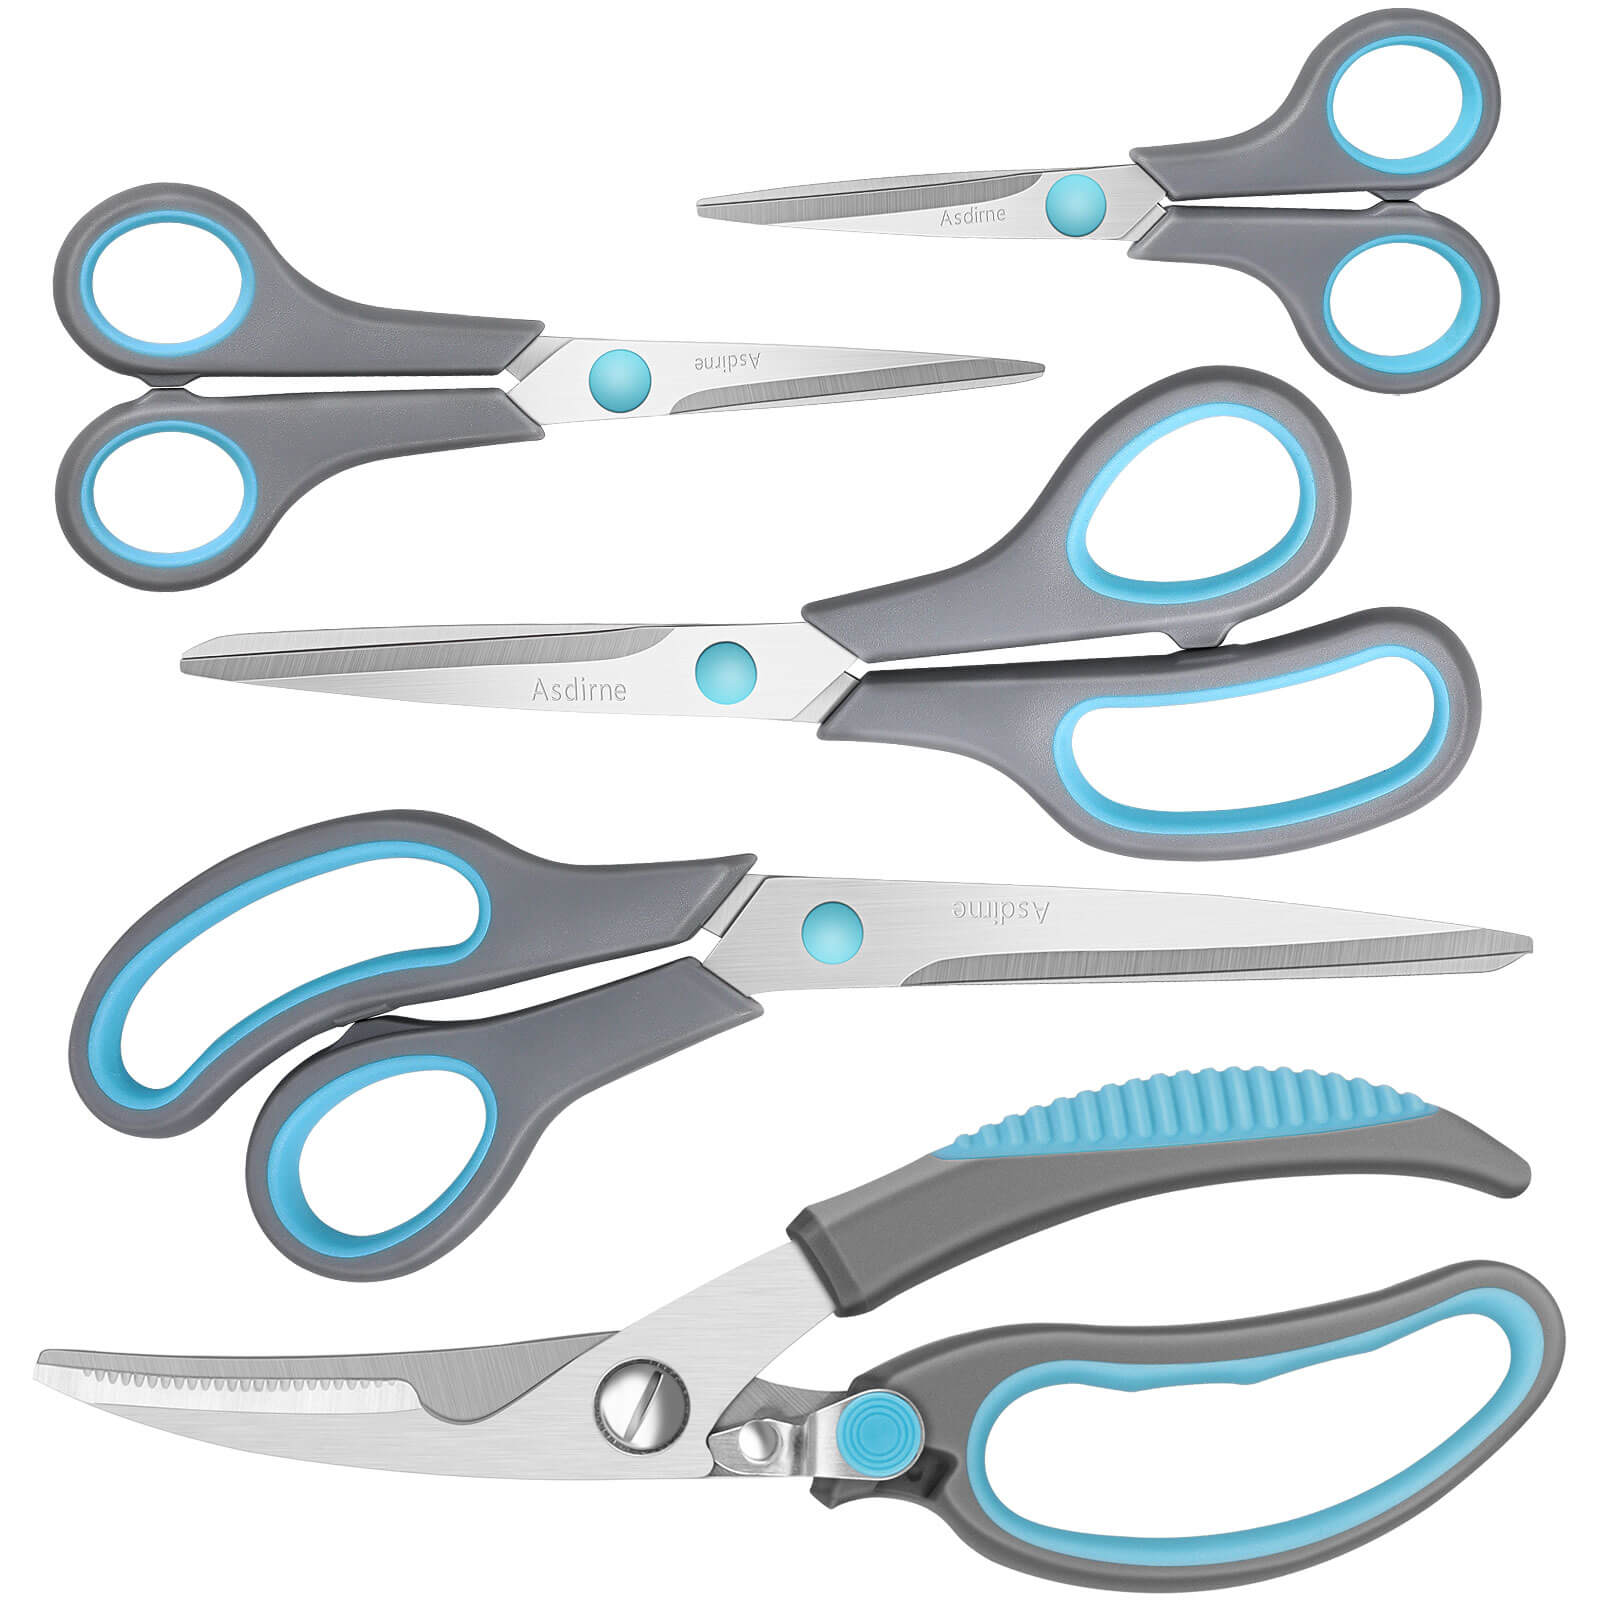 Asdirne Kitchen Scissors Set Of 5